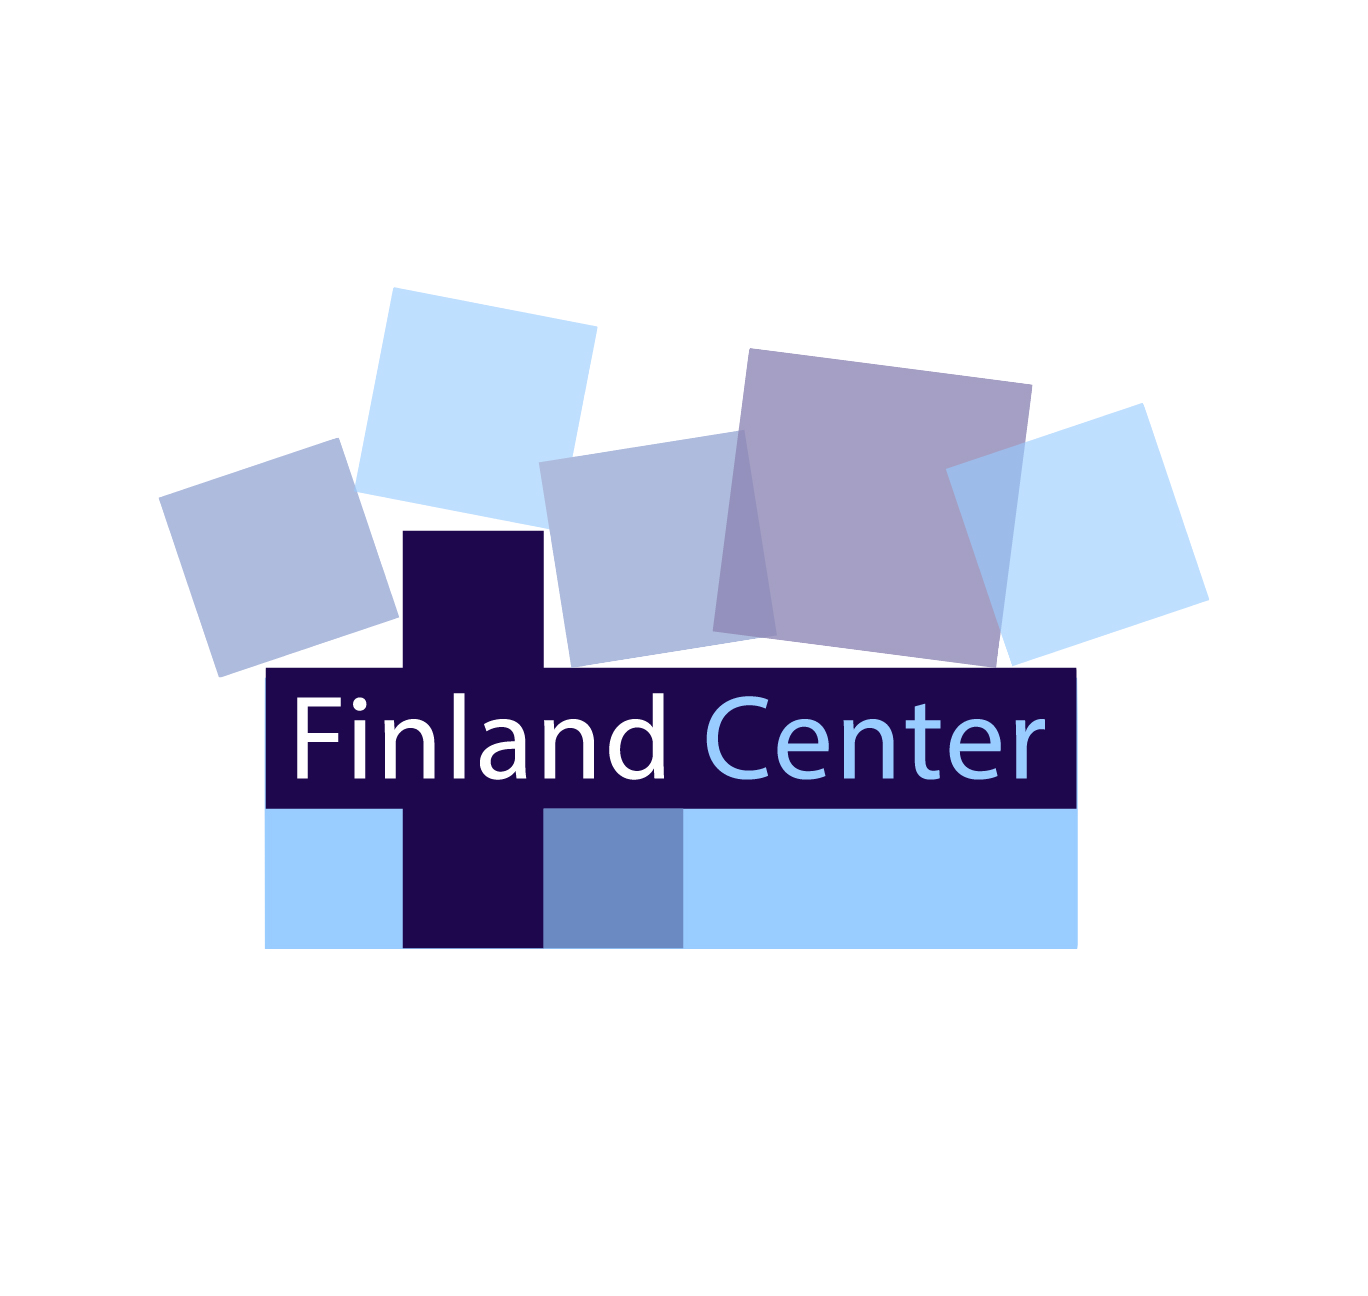 Finland Center Foundation